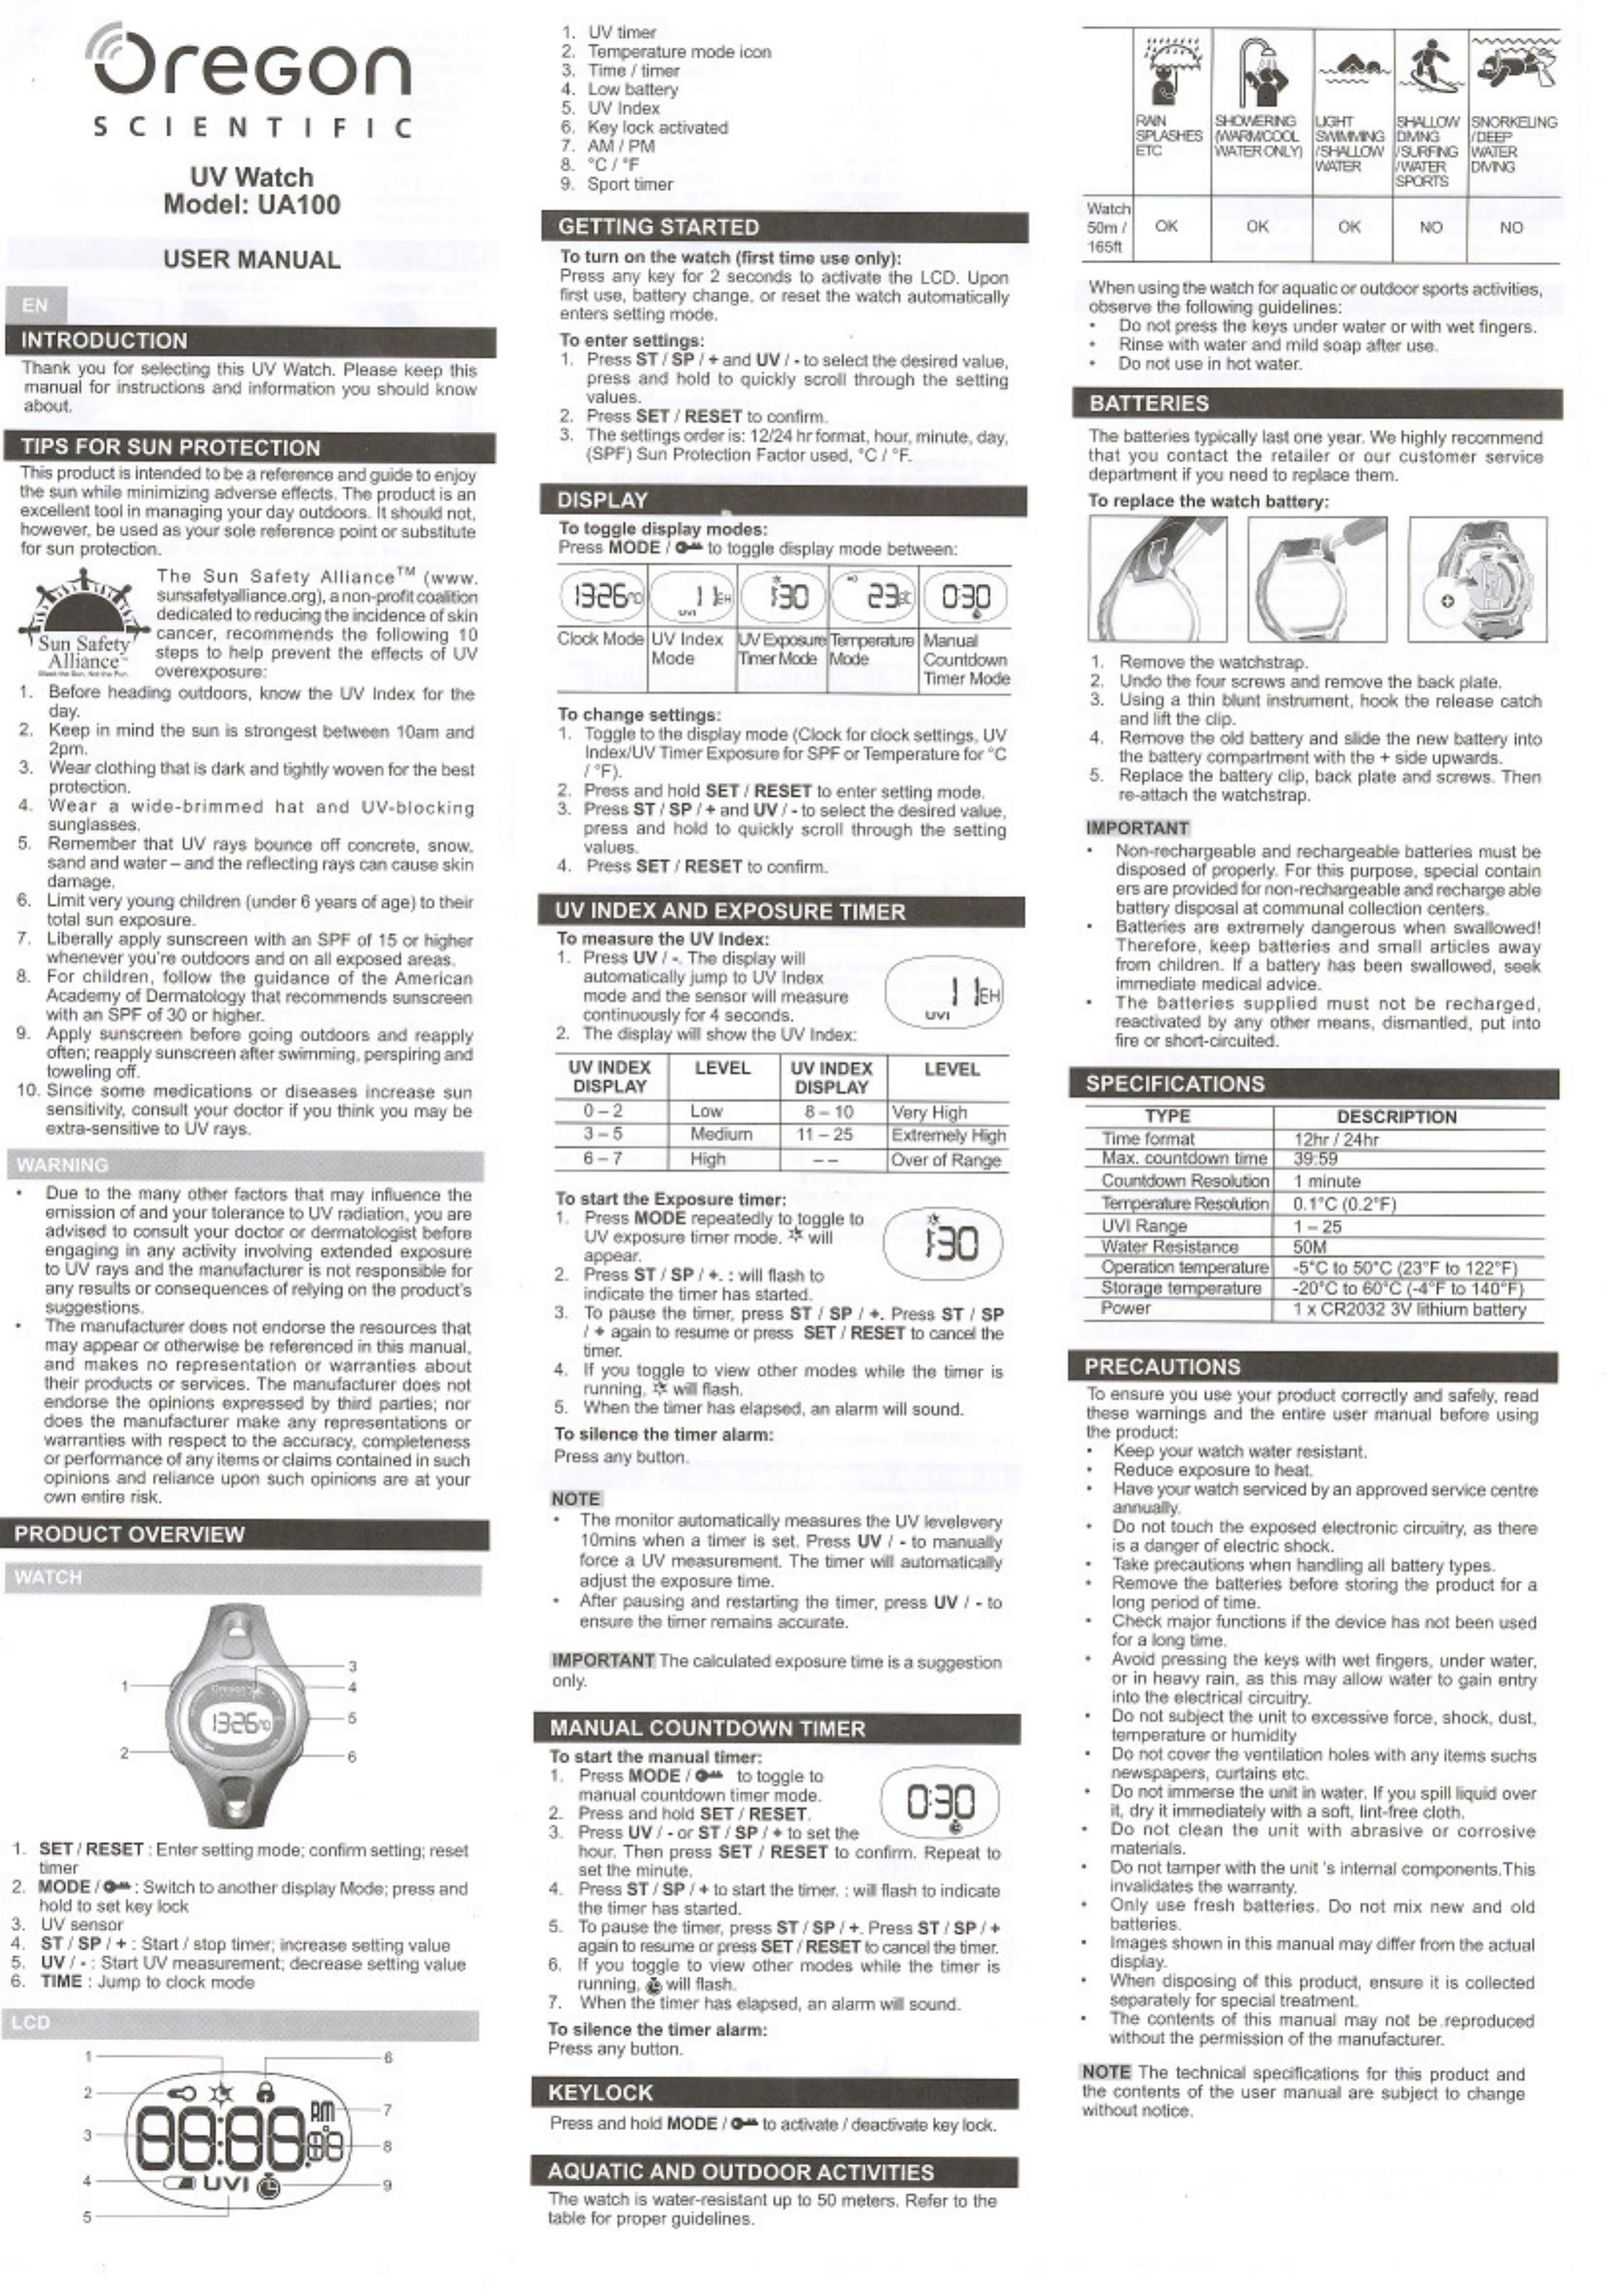 Oregon Scientific UA100 Watch User Manual